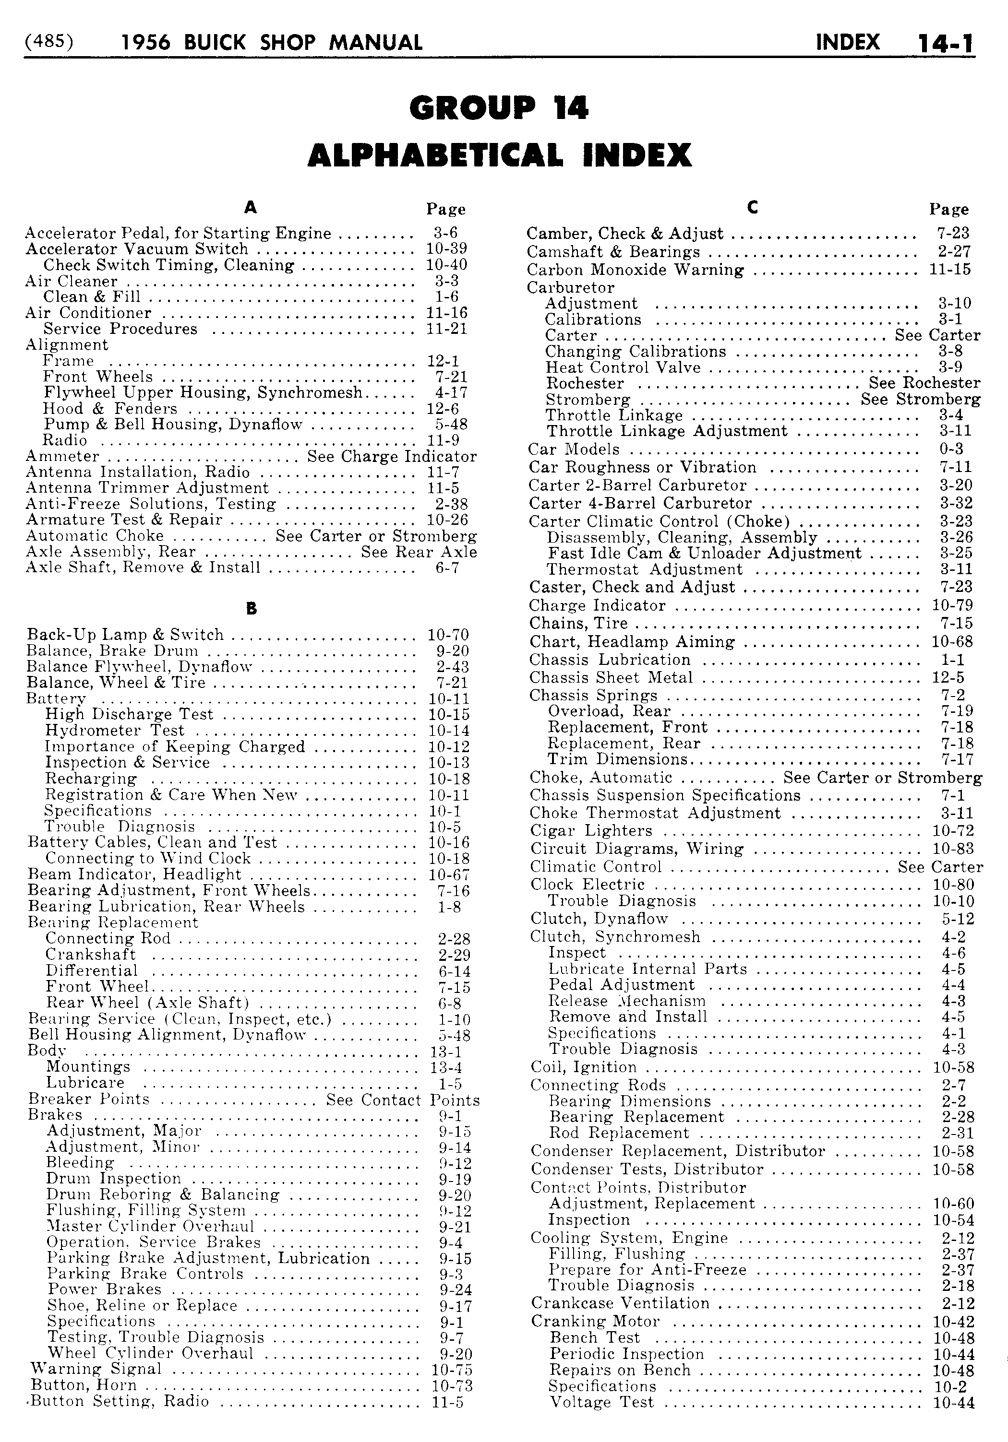 n_15 1956 Buick Shop Manual - Index-001-001.jpg